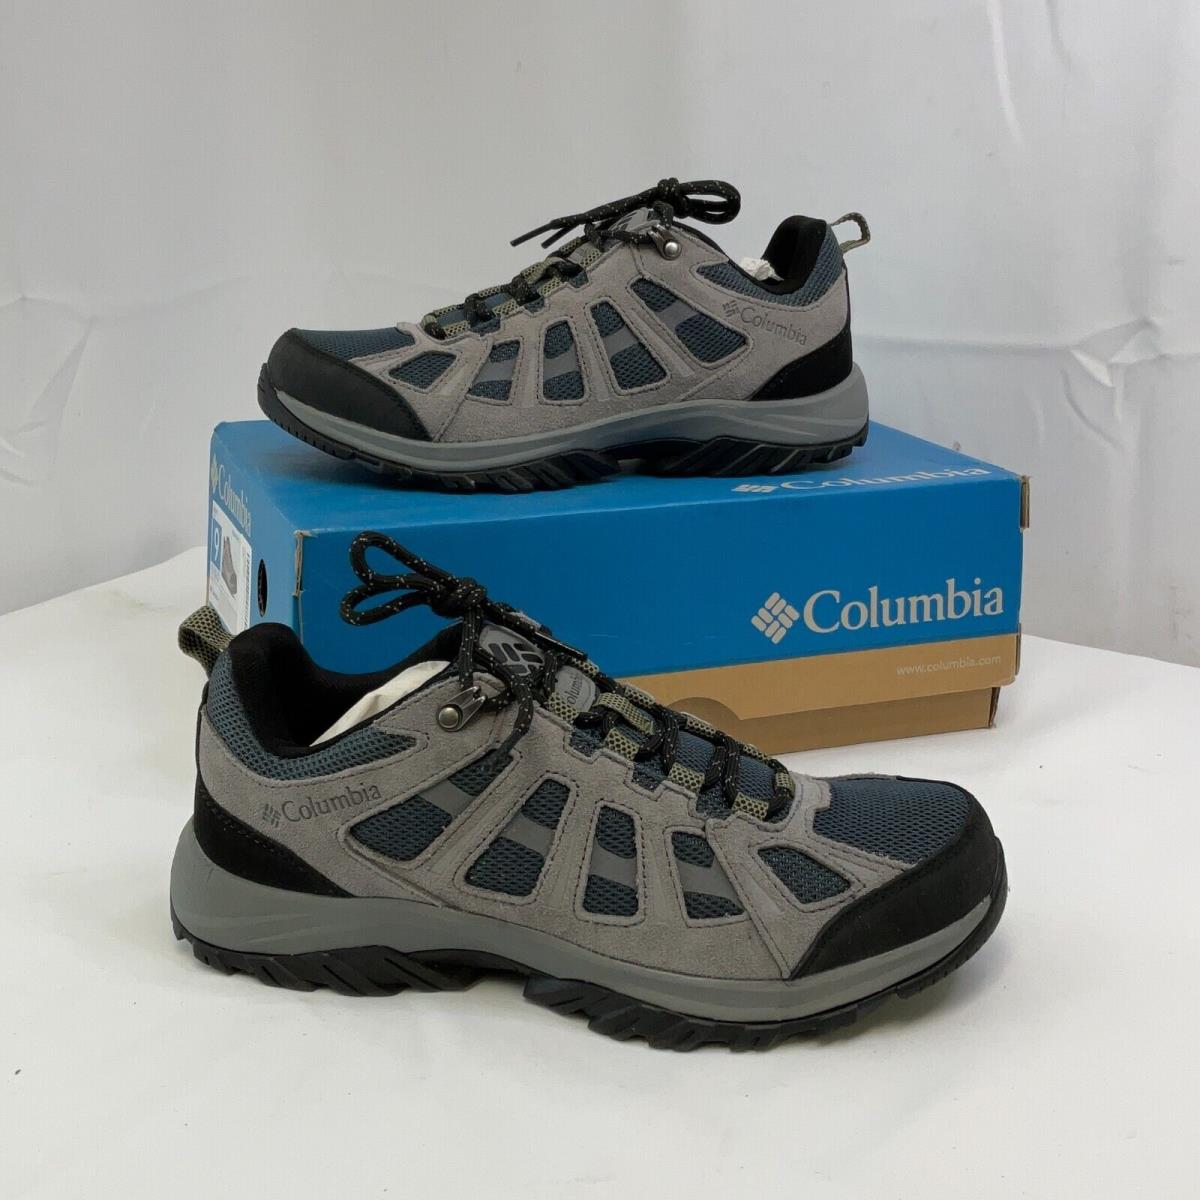 Columbia Redmond Iii Mens Graphite Black Outdoor Hiking Shoes Size 9 BM0167-053